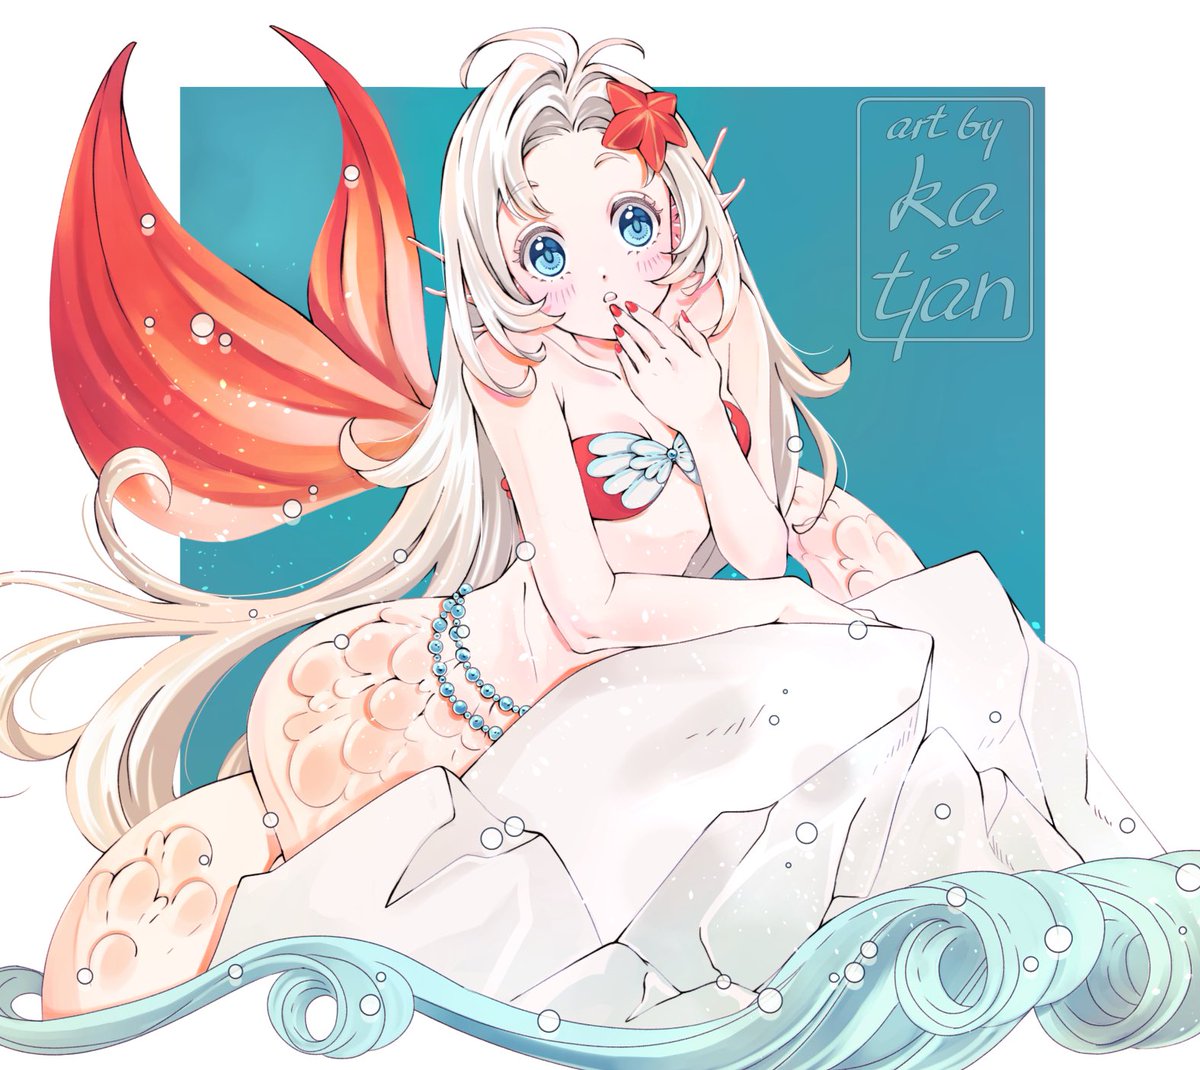 It’s merMay 🌸
So here is my mermaid for this year !

#mermay #mermay2023 #drawmermay2023 #anime #manga #animestyle #mangastyle #characterdesign #kawaii #cuteanime #cuteillust #animemermaid #originalcharacter #animefan #mangaworld #mermaid